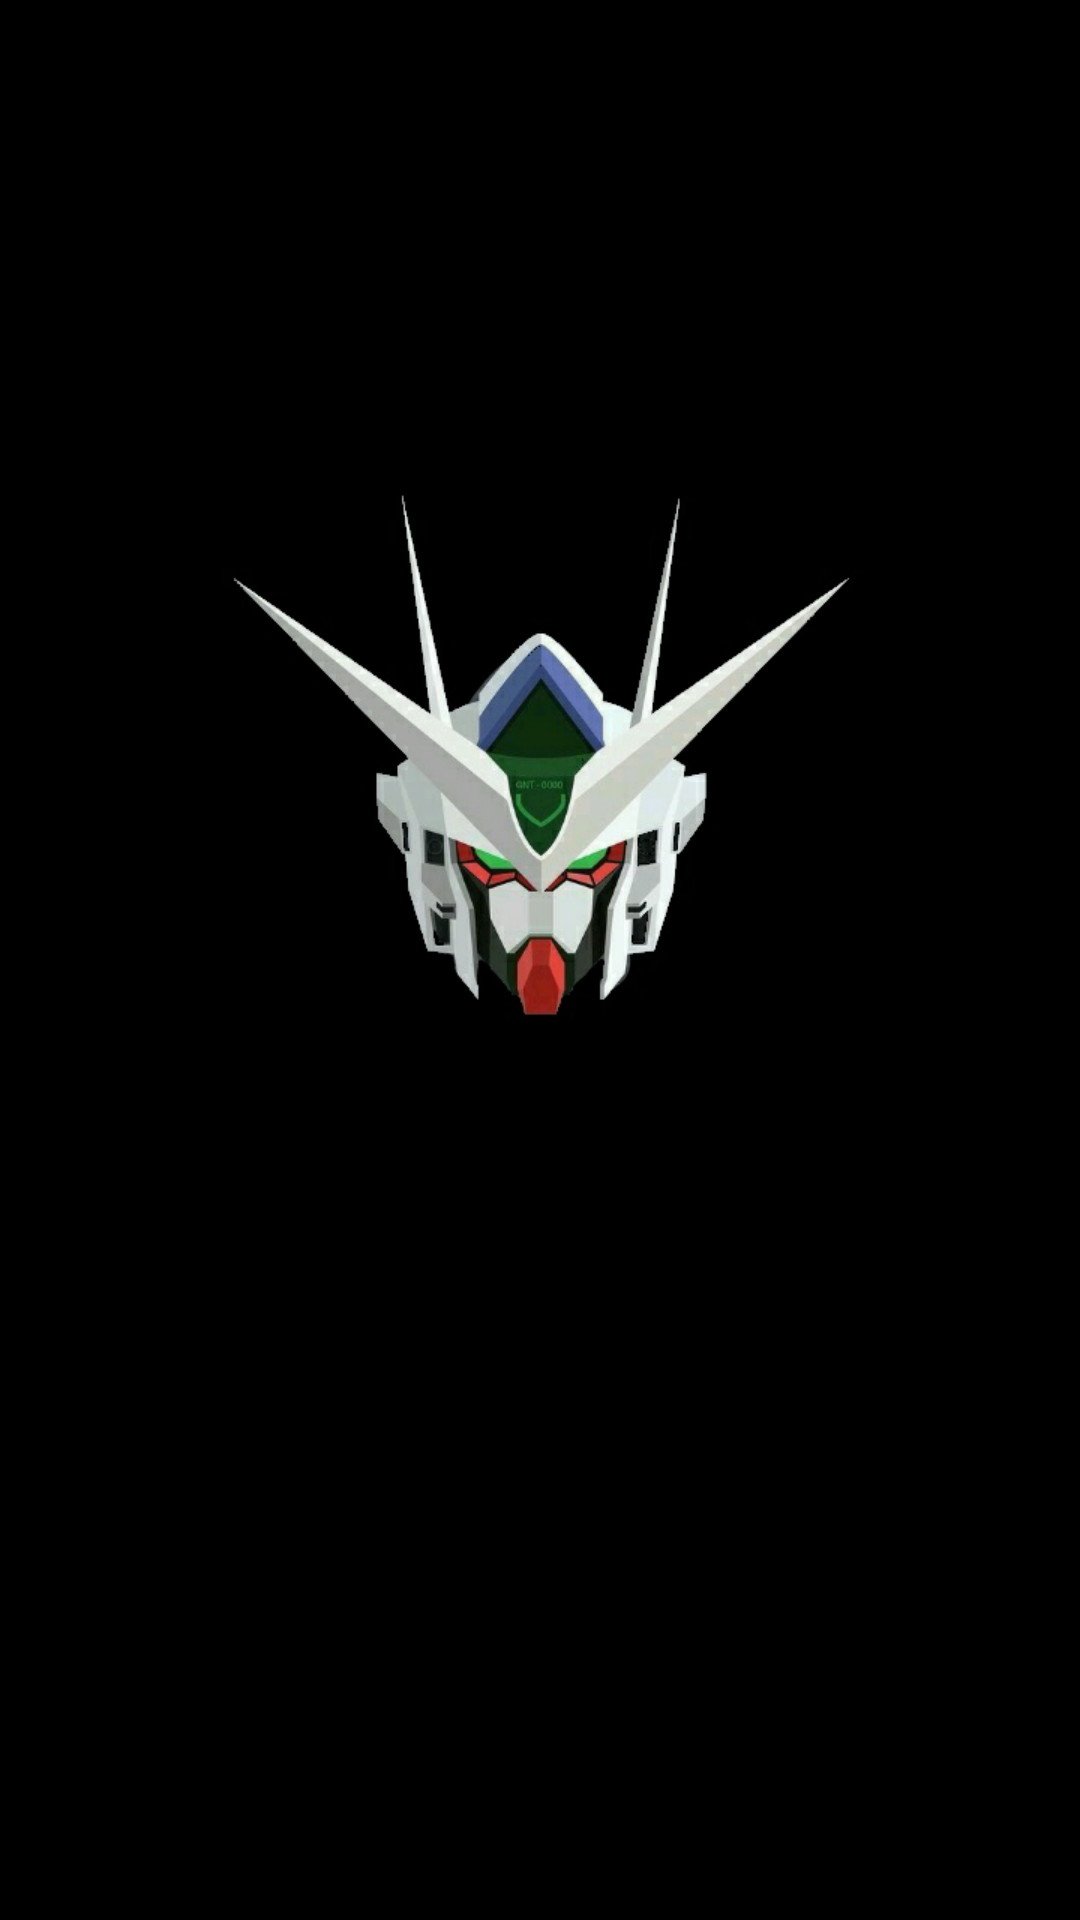 Ahmad Maulana Tensei Minimalist Wallpaper Gundam Android Design T Co 2ve0c6jqme Twitter